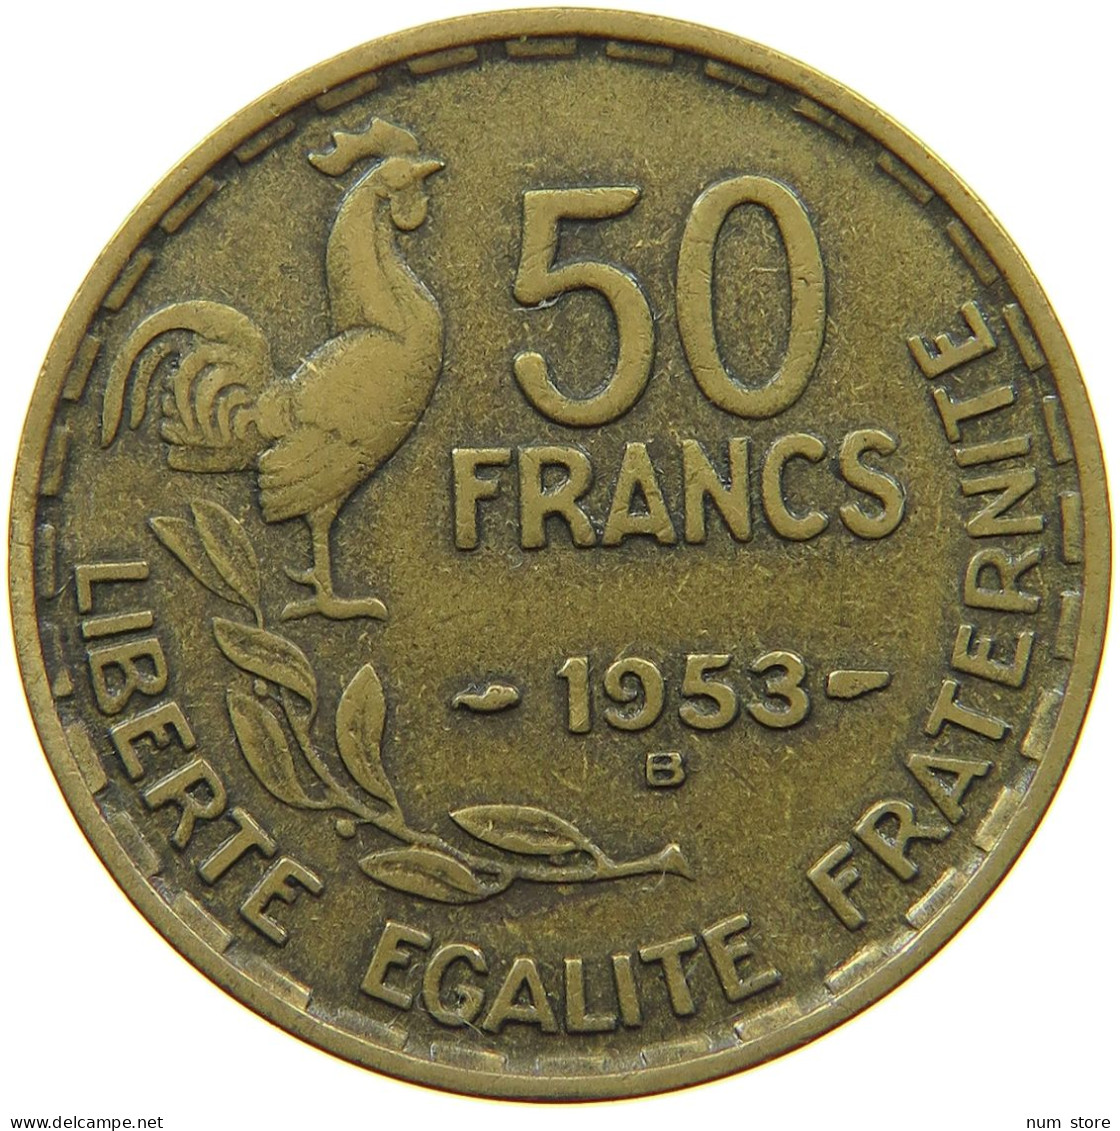 FRANCE 50 FRANCS 1953 B #s066 0241 - 50 Francs